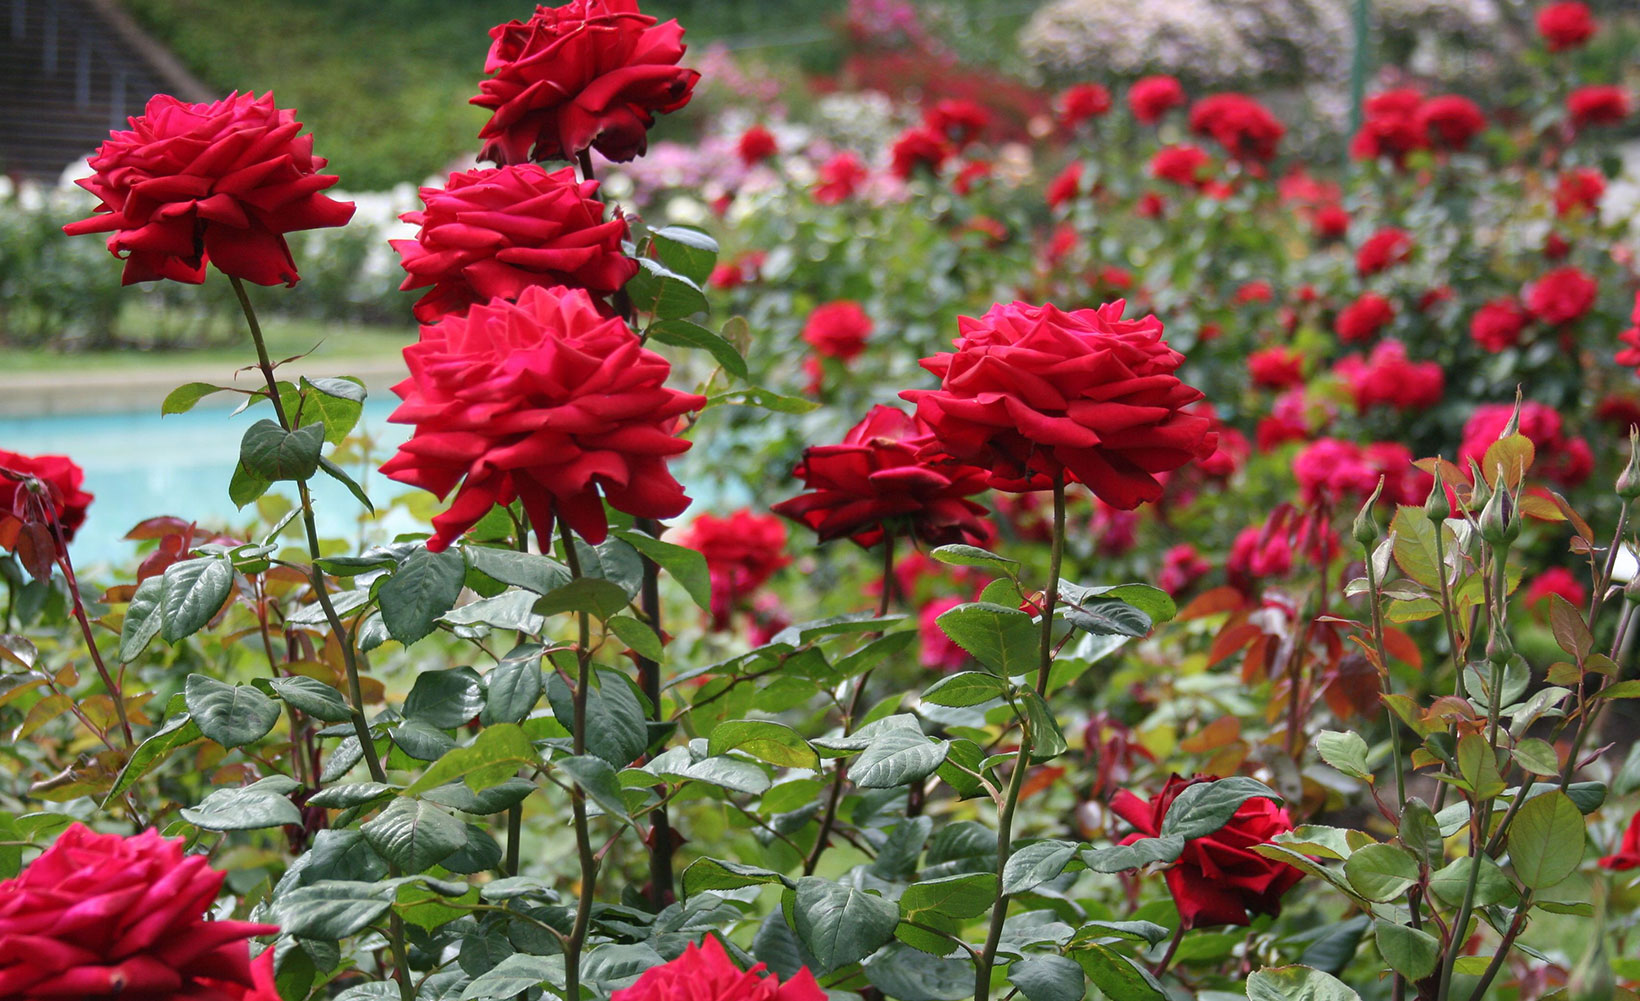 Ab 28. Februar findet in Chandigarh das Rosenfestival statt